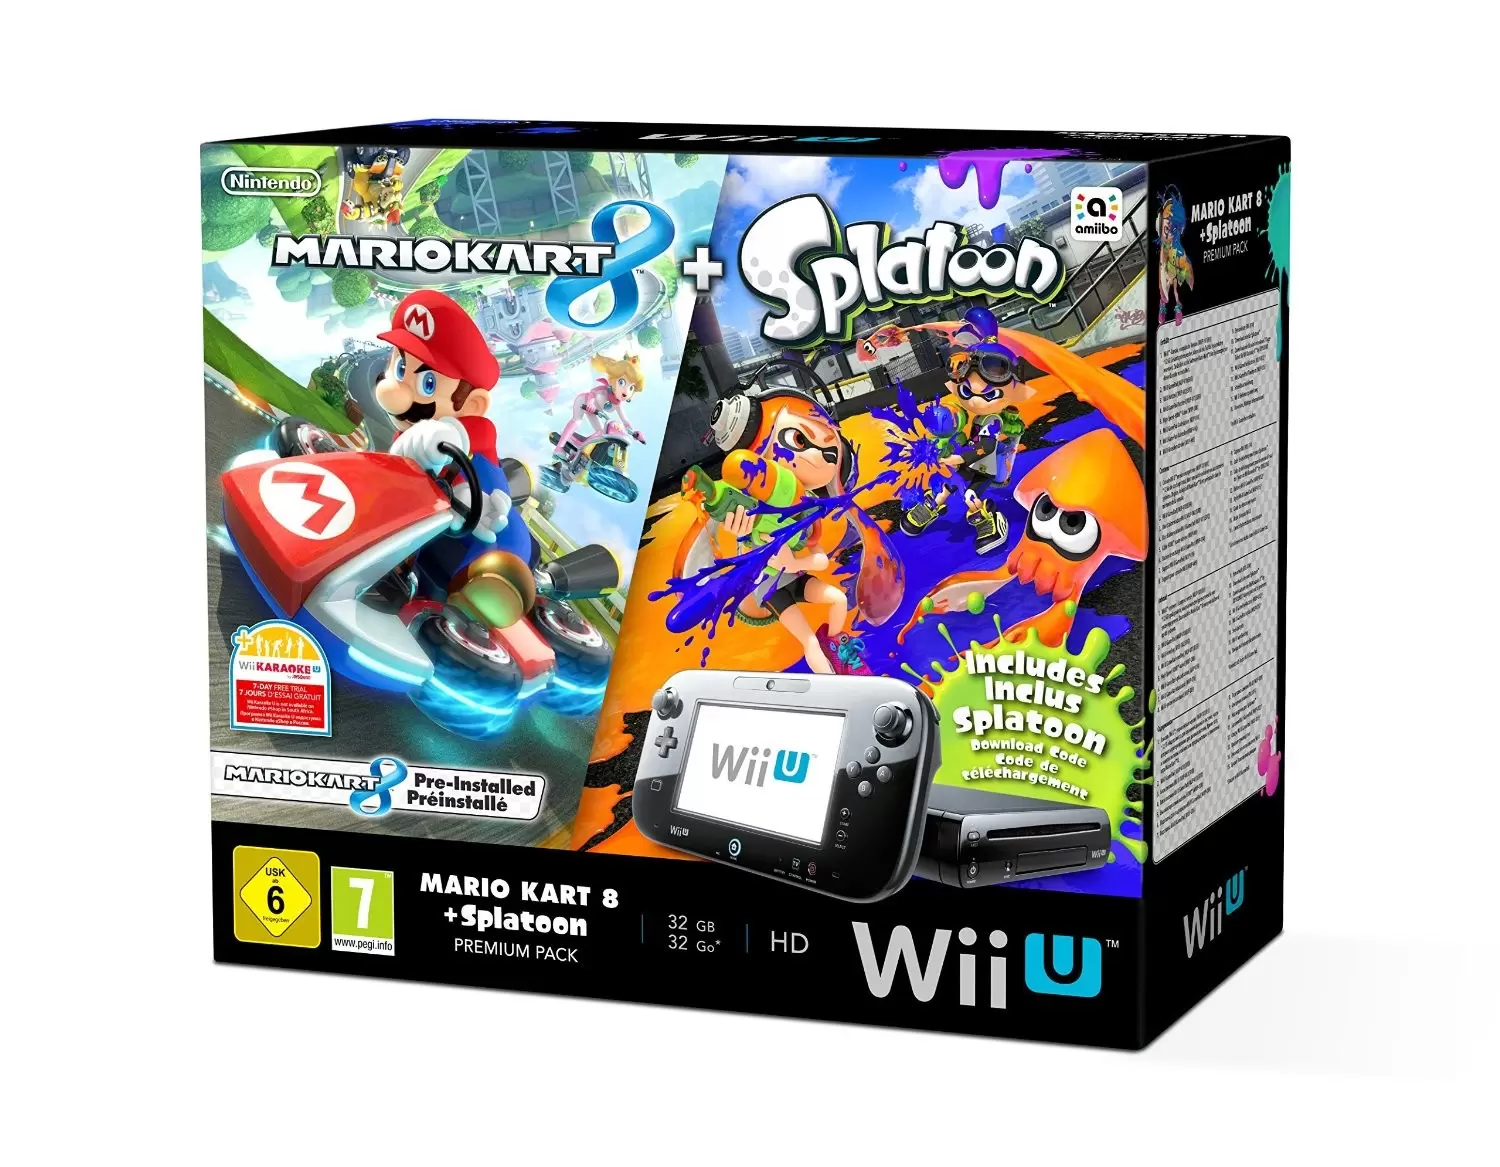 Matériel Wii U - Console Wii U + Mario Kart 8 + Splatoon